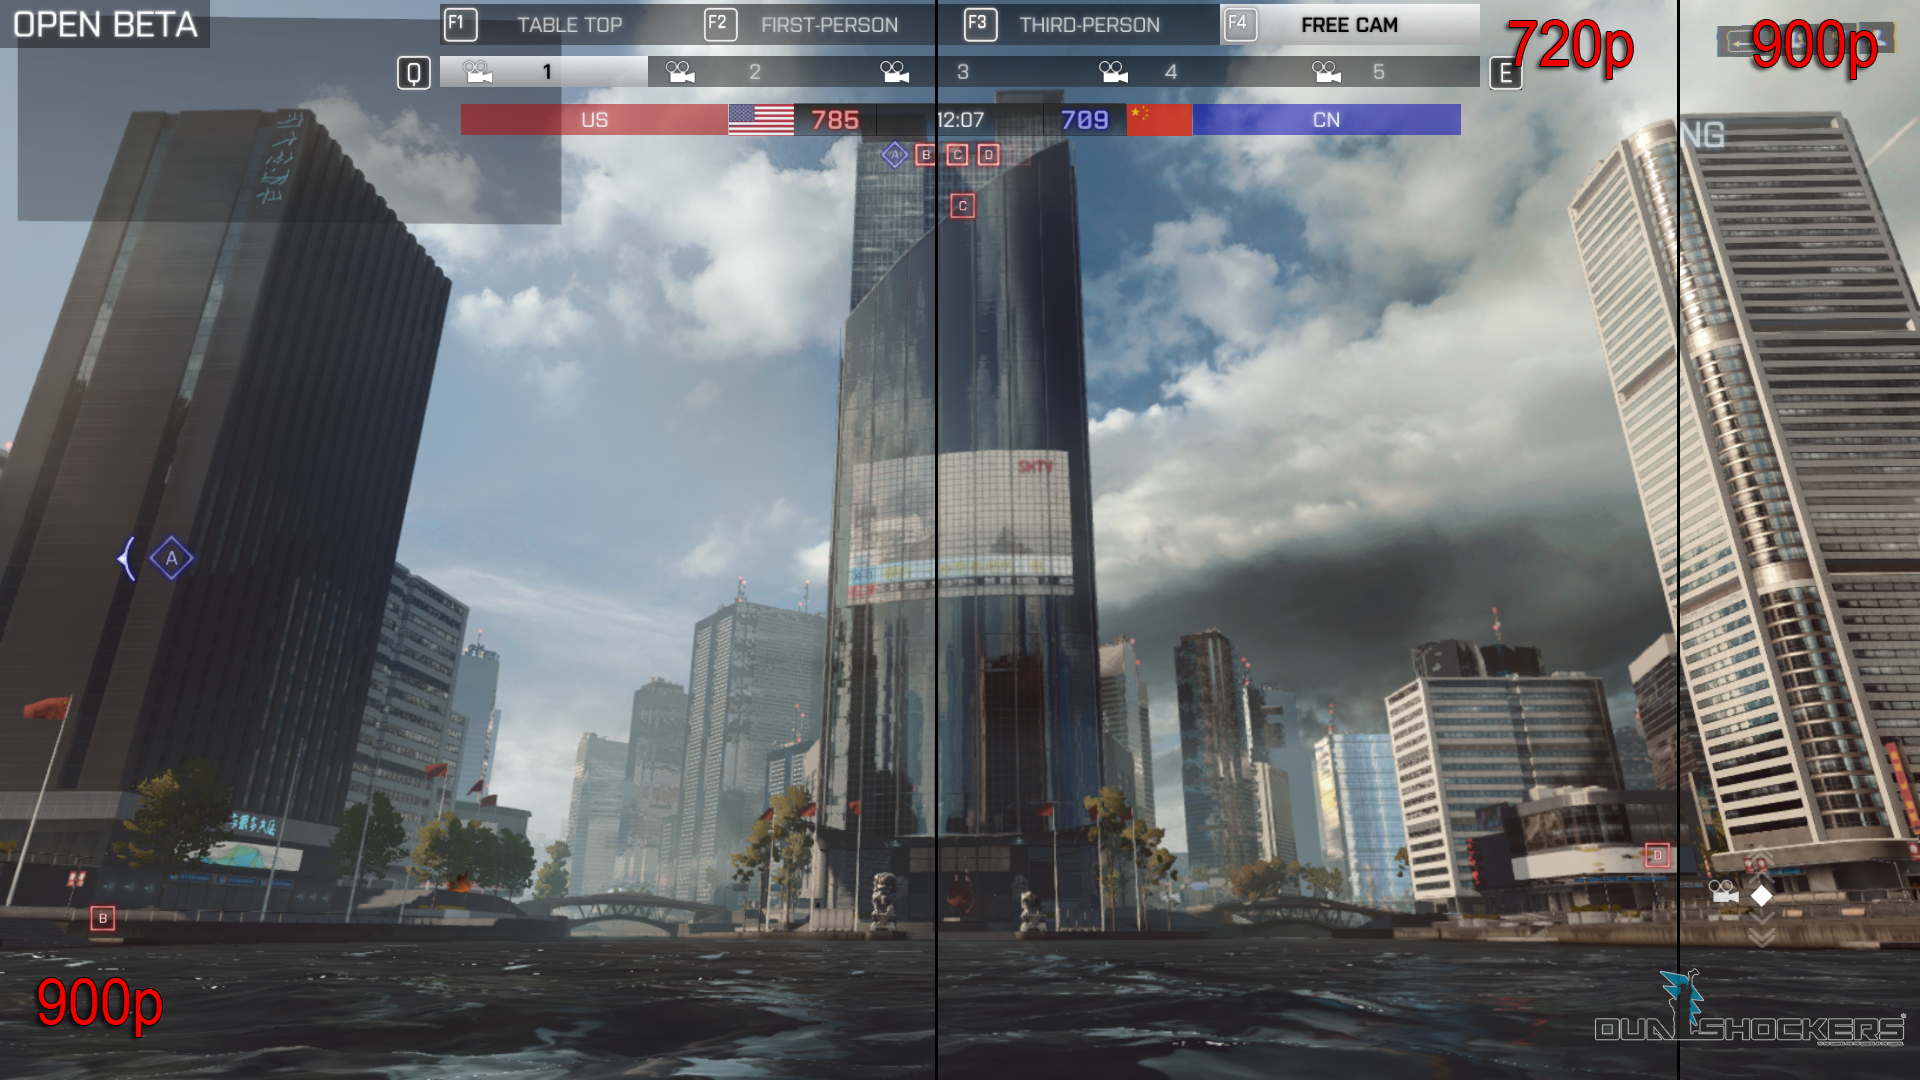 Battlefield 4 Visual Analysis – PS4 vs. Xbox One vs. PC, Xbox 360